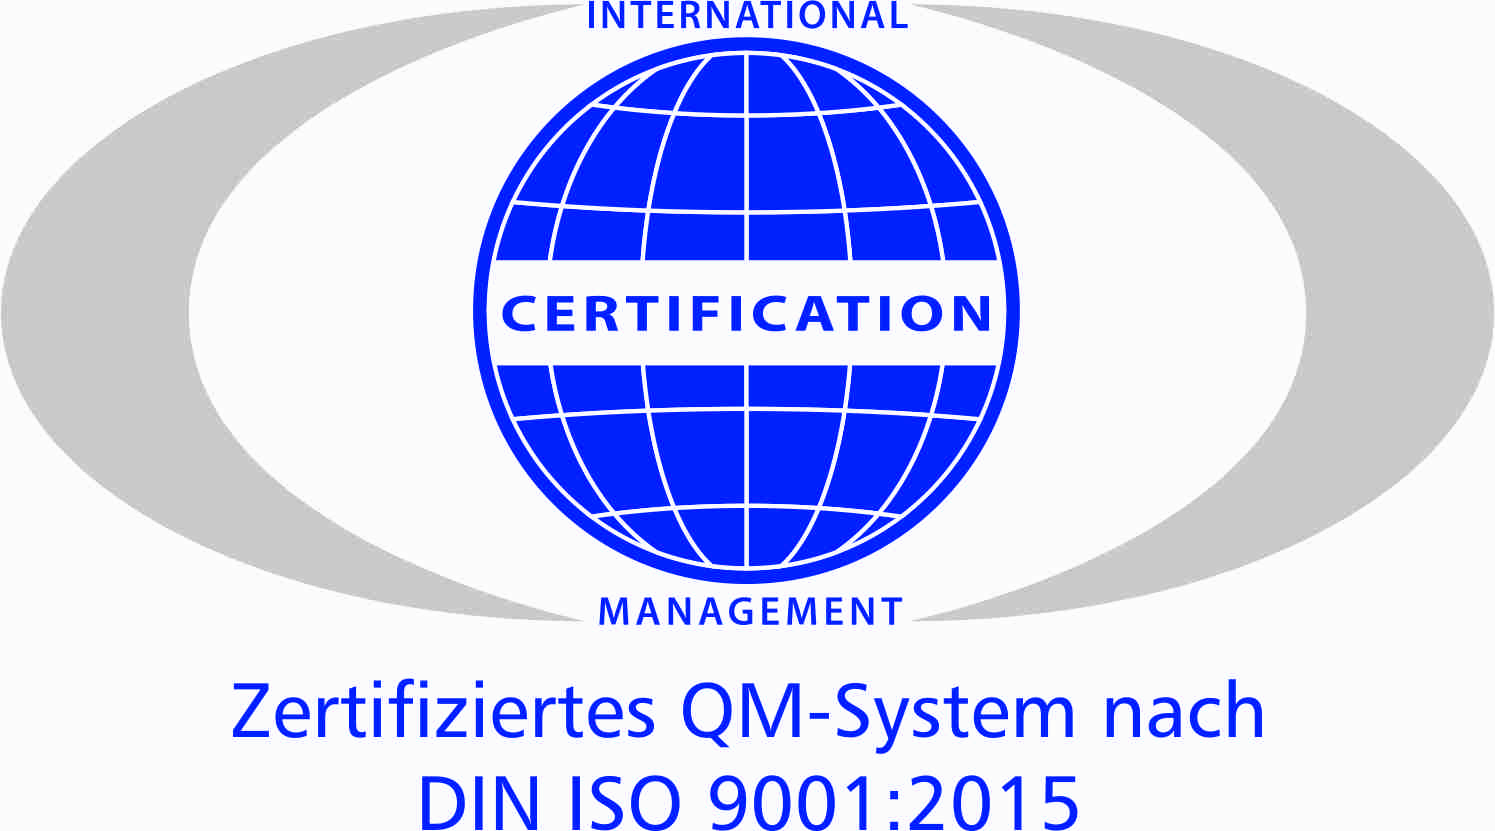 International certification management - 